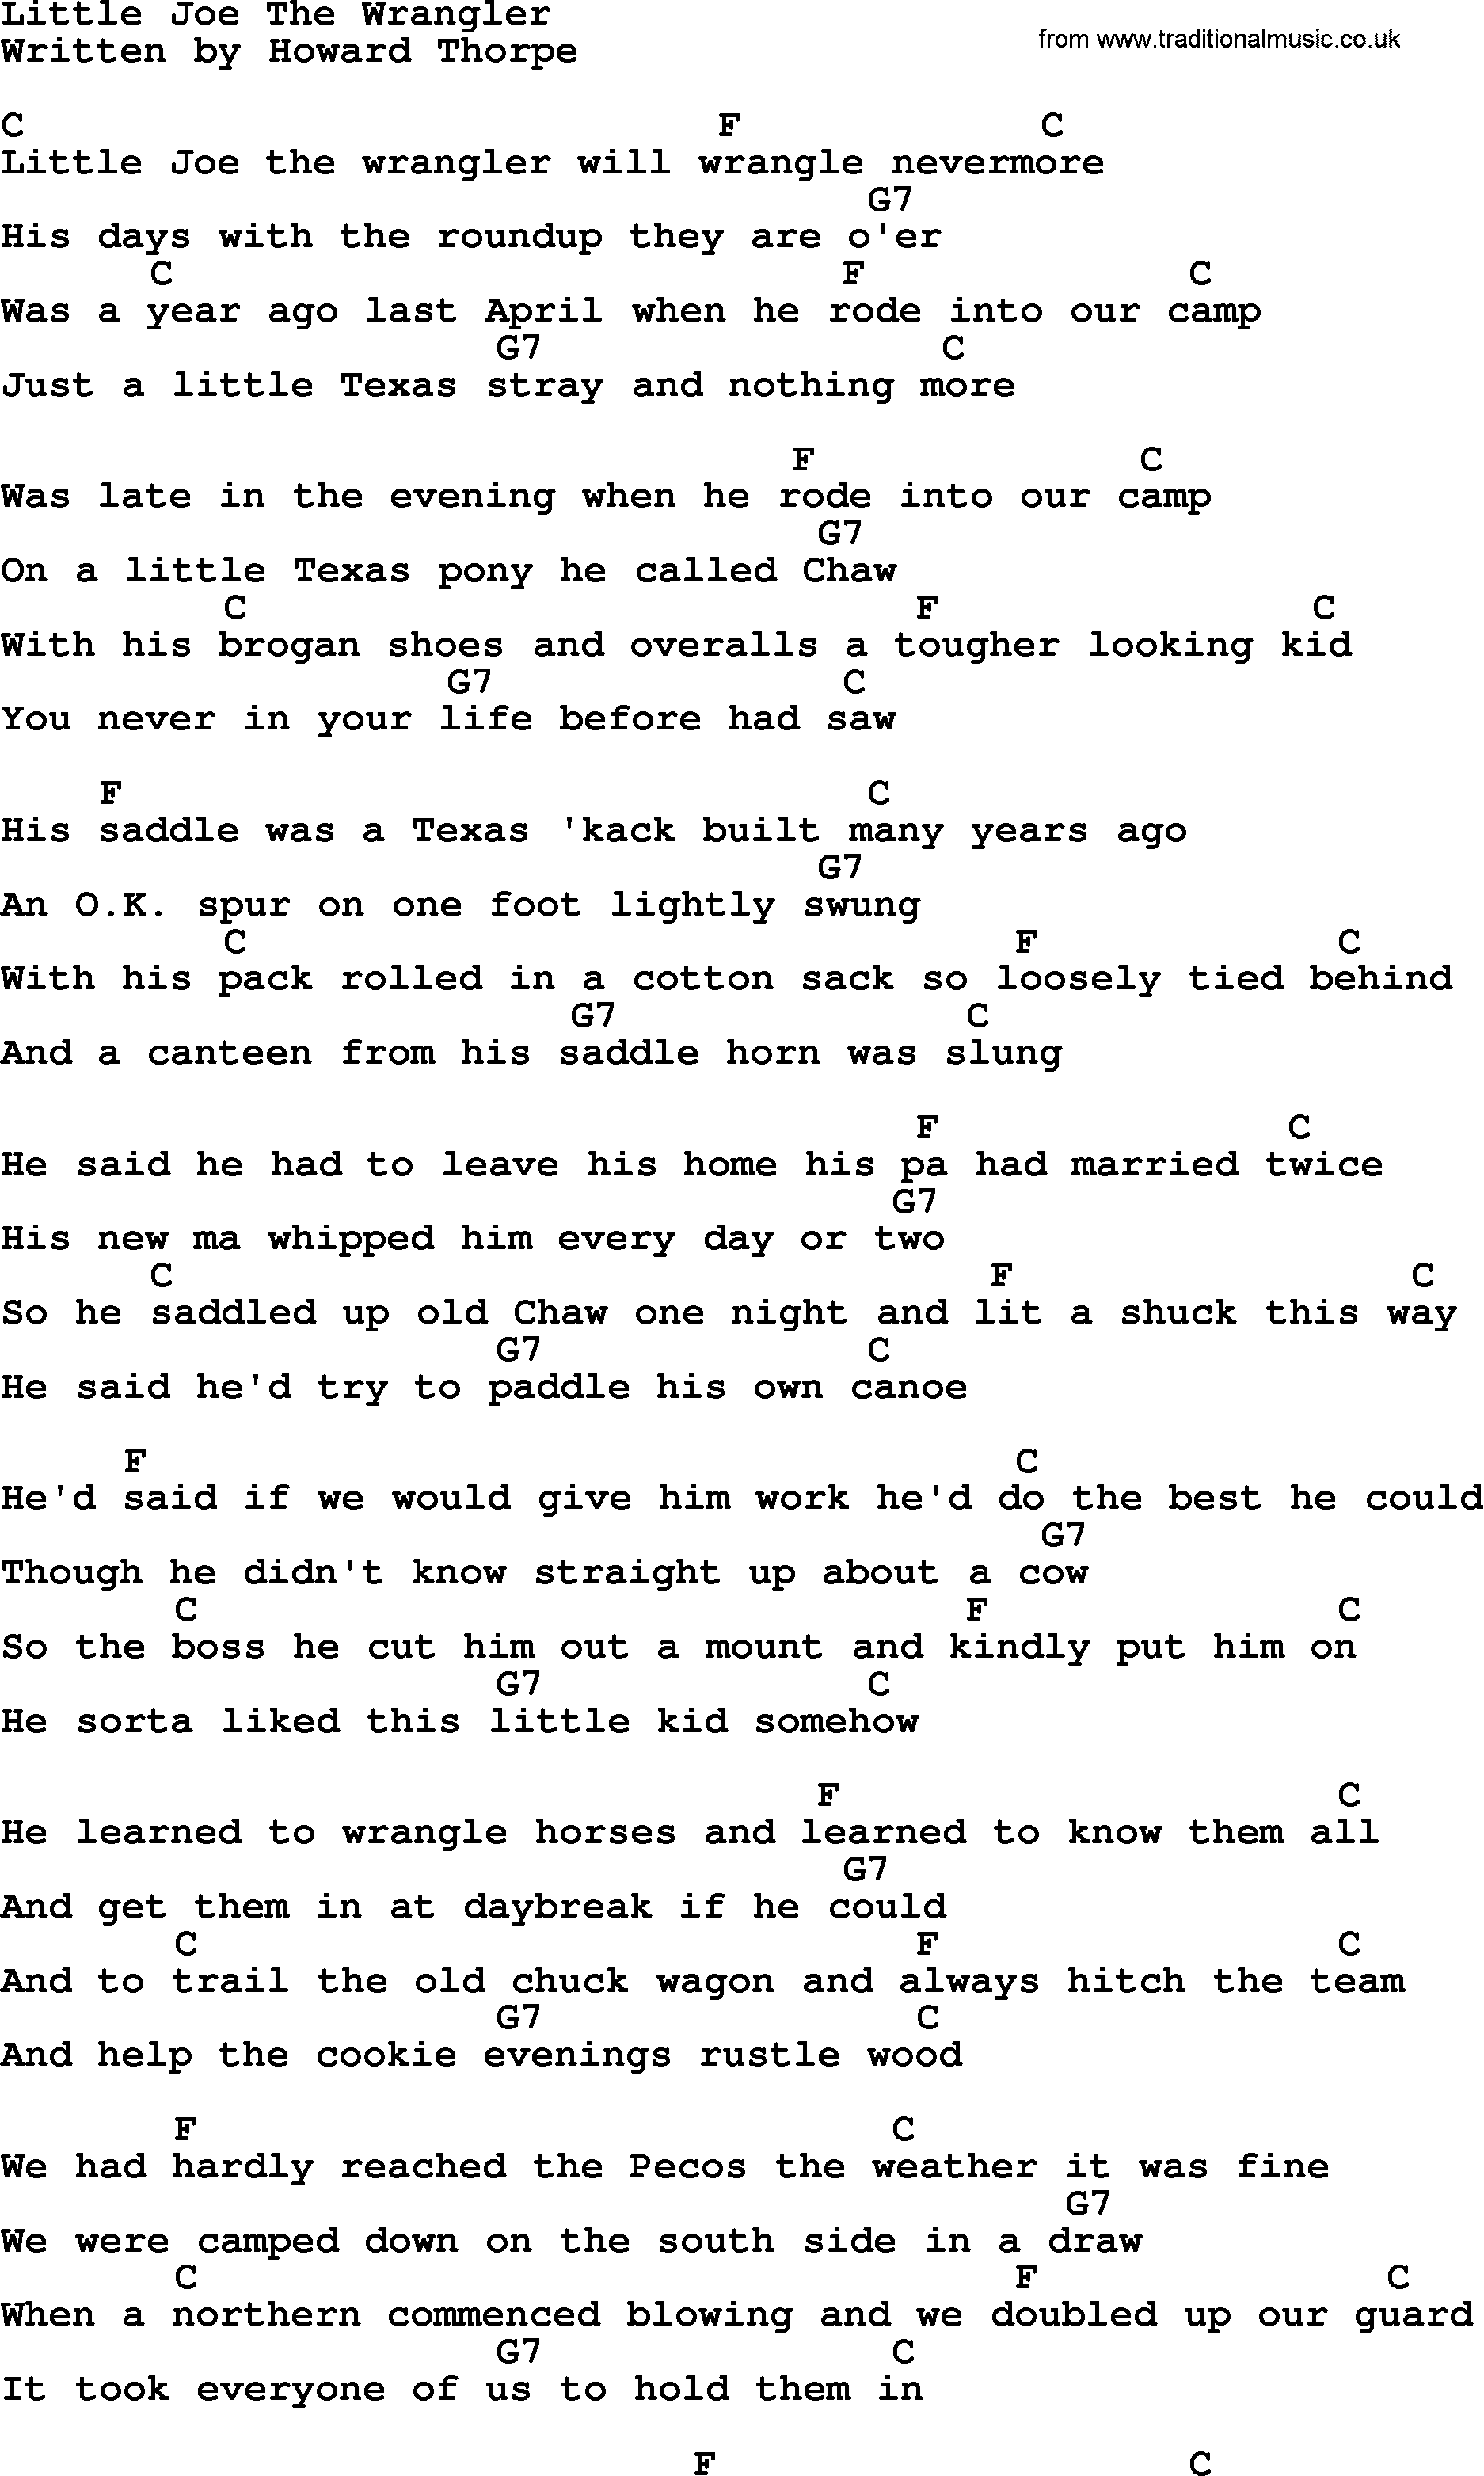 Marty Robbins song: Little Joe The Wrangler, lyrics and chords